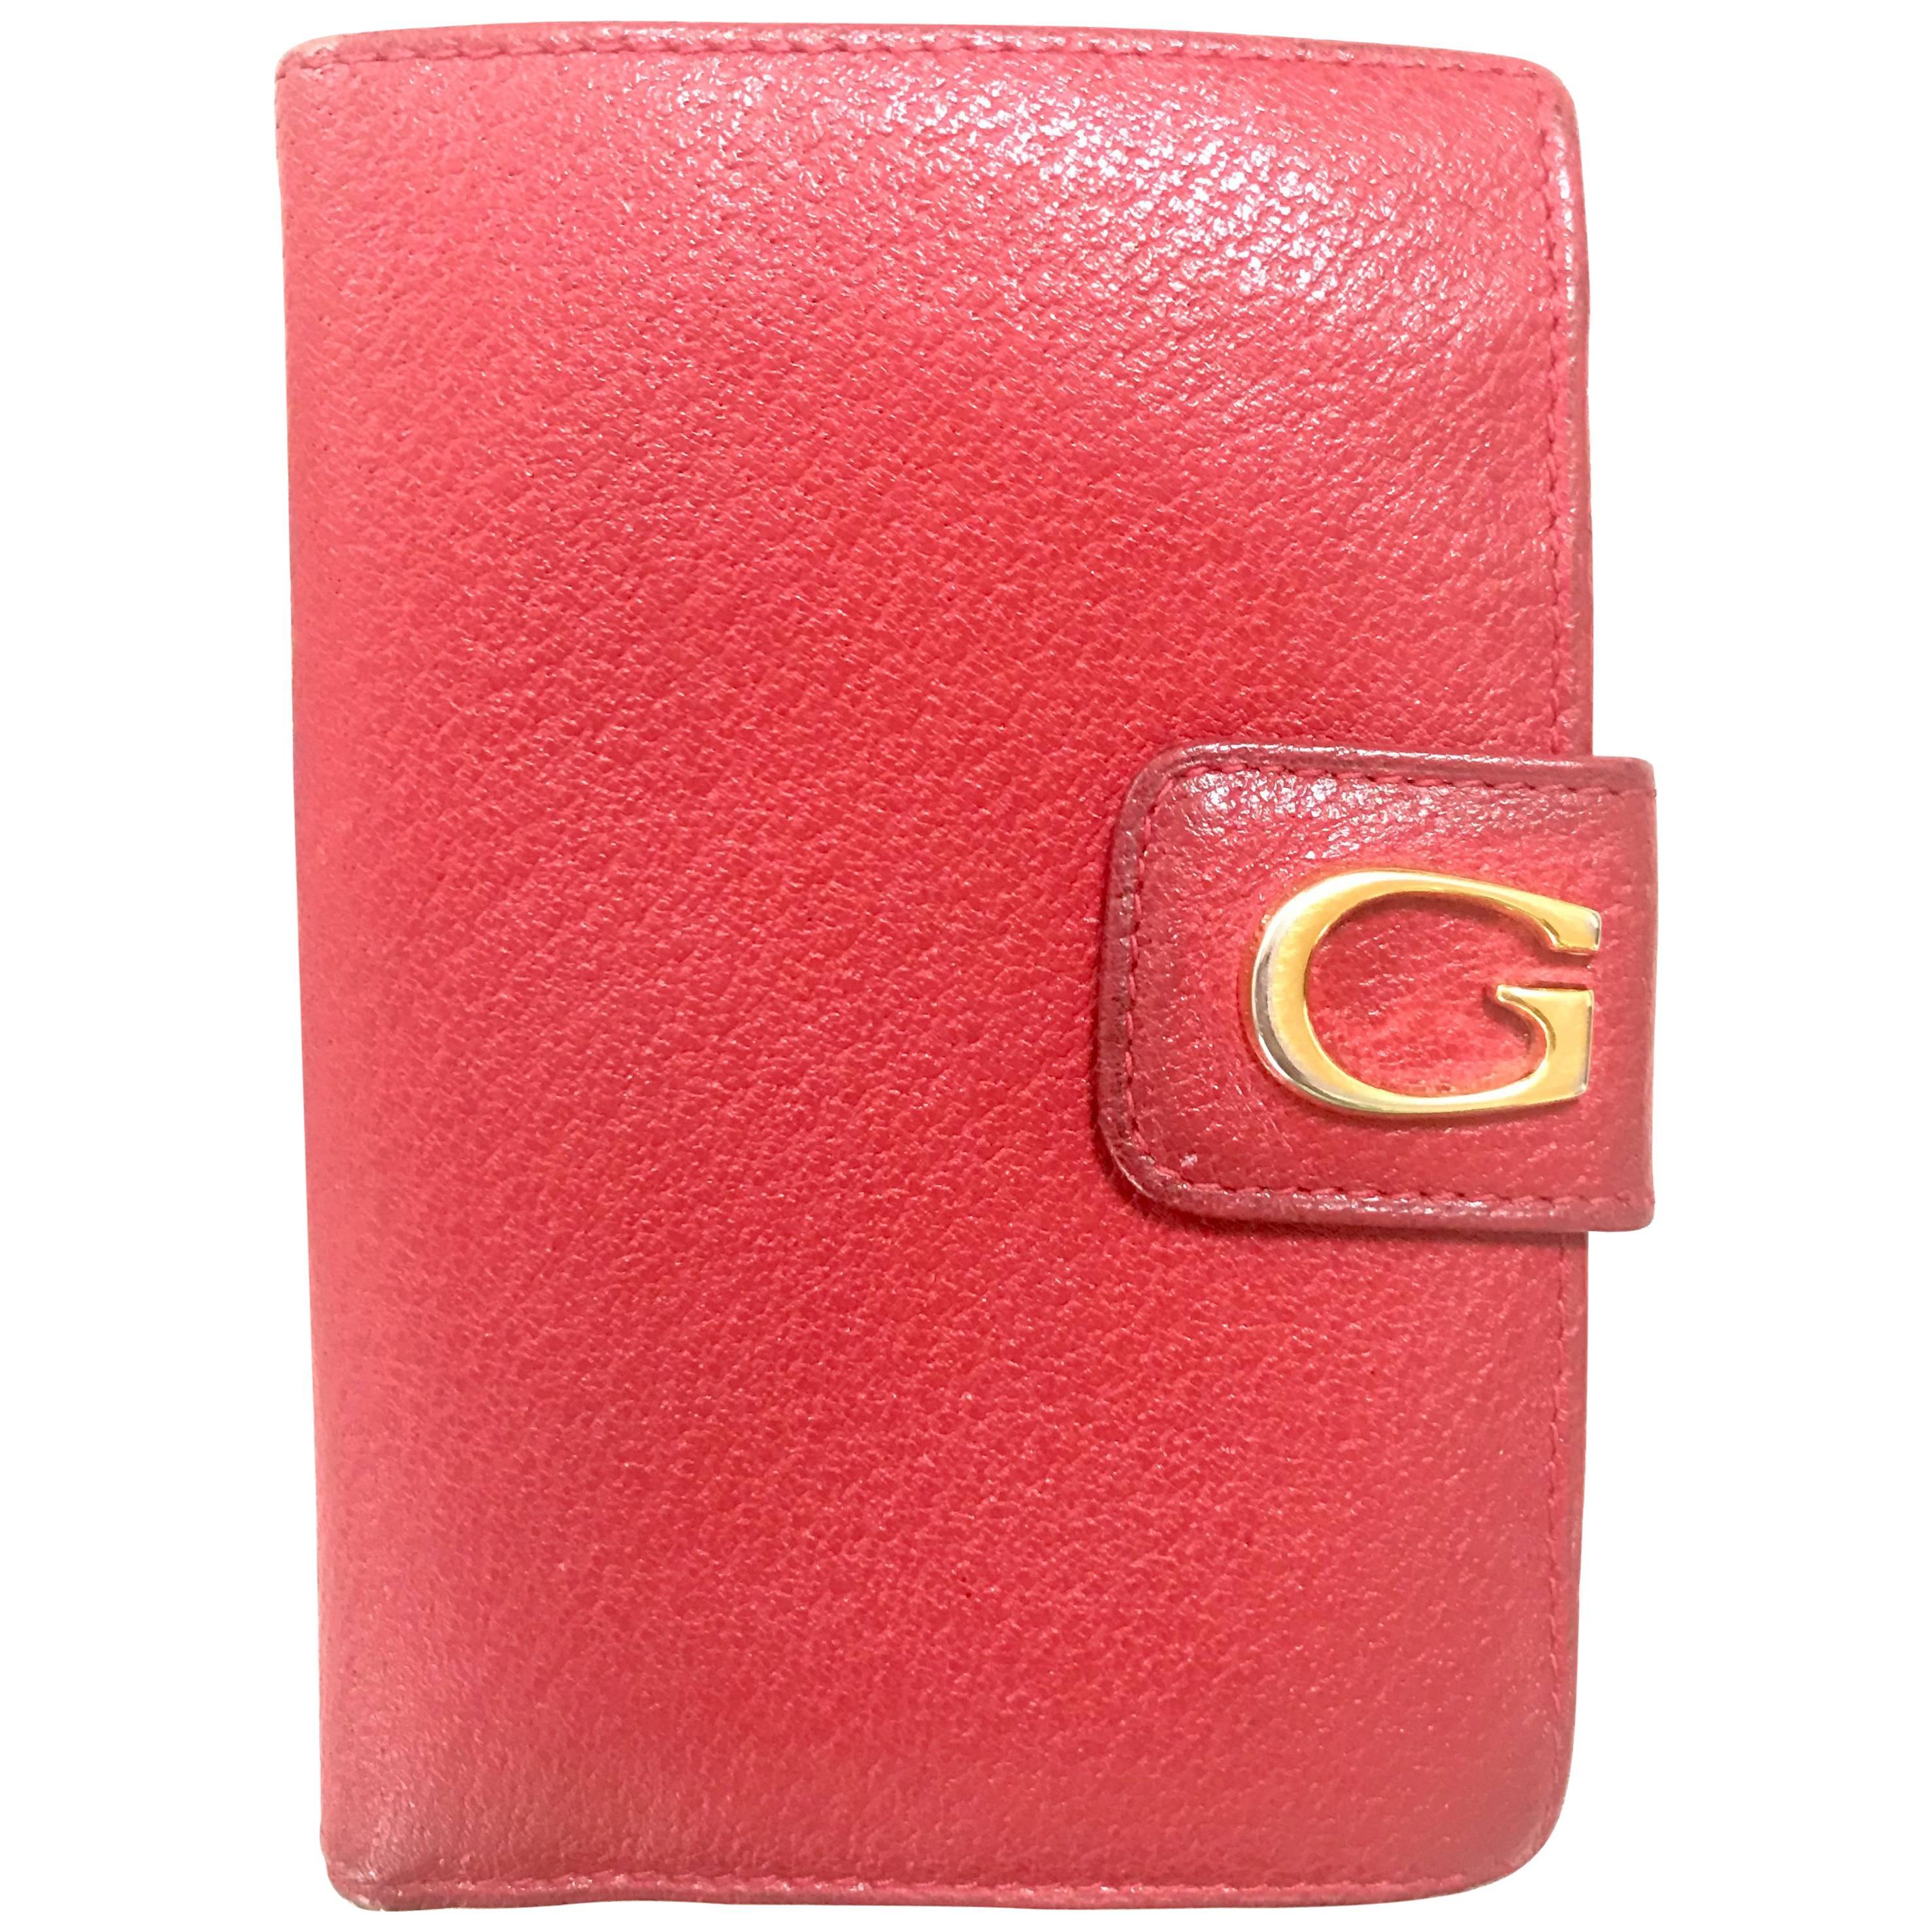 Vintage Gucci red pigskin leather wallet with golden G logo hardware closure.  For Sale